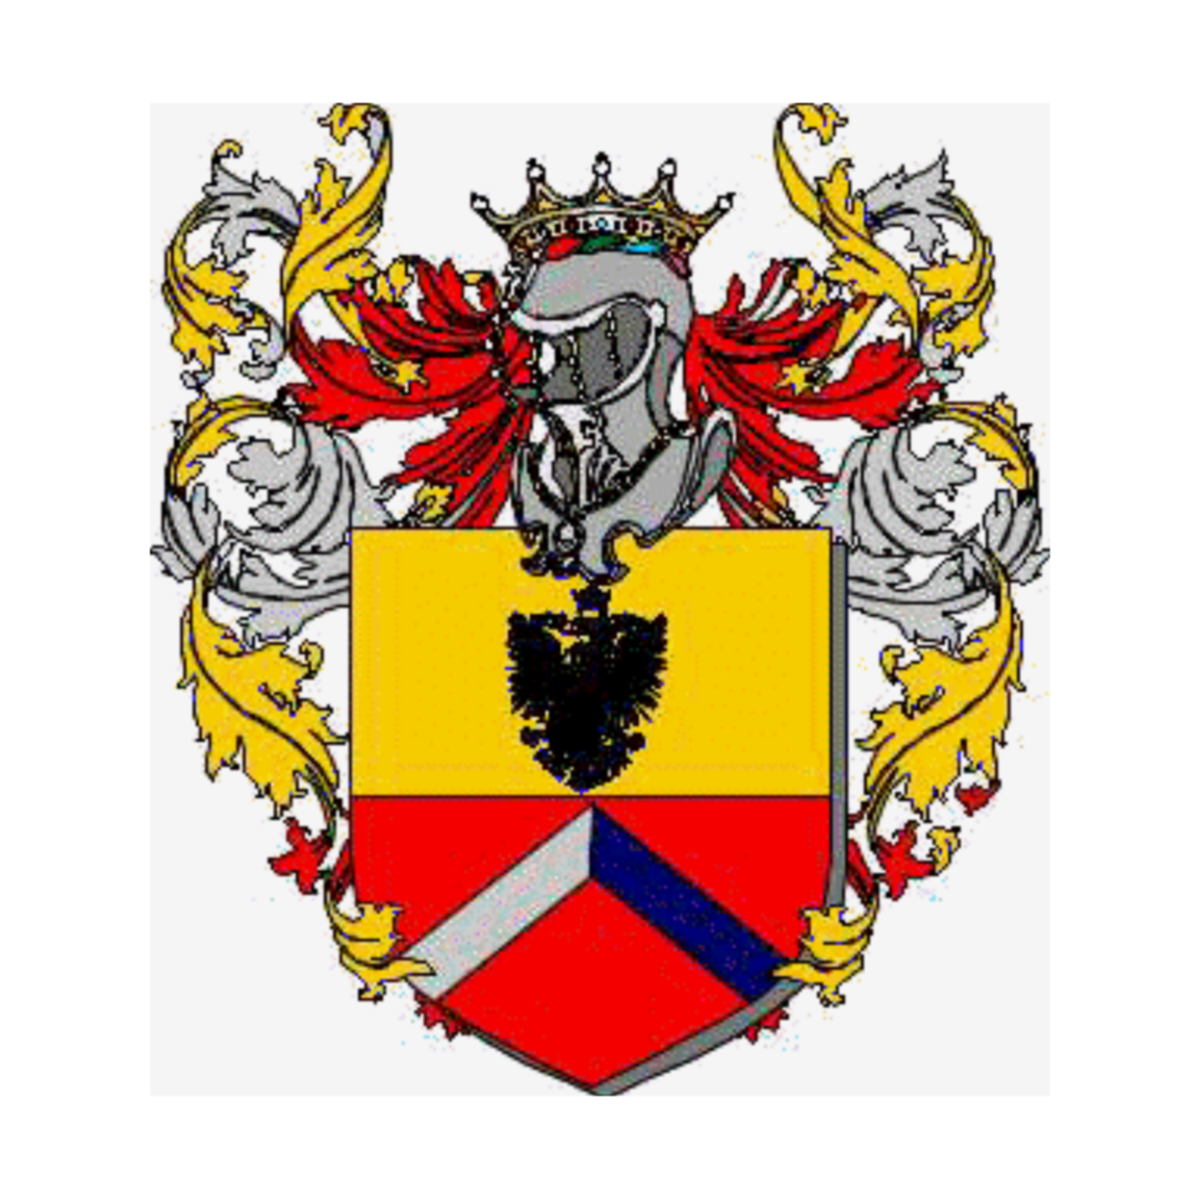 Wappen der Familie, Tealdi,Tebaldi,Tedalda,Teobaldi,Thebaldis,Tipaldi,Tipaldo